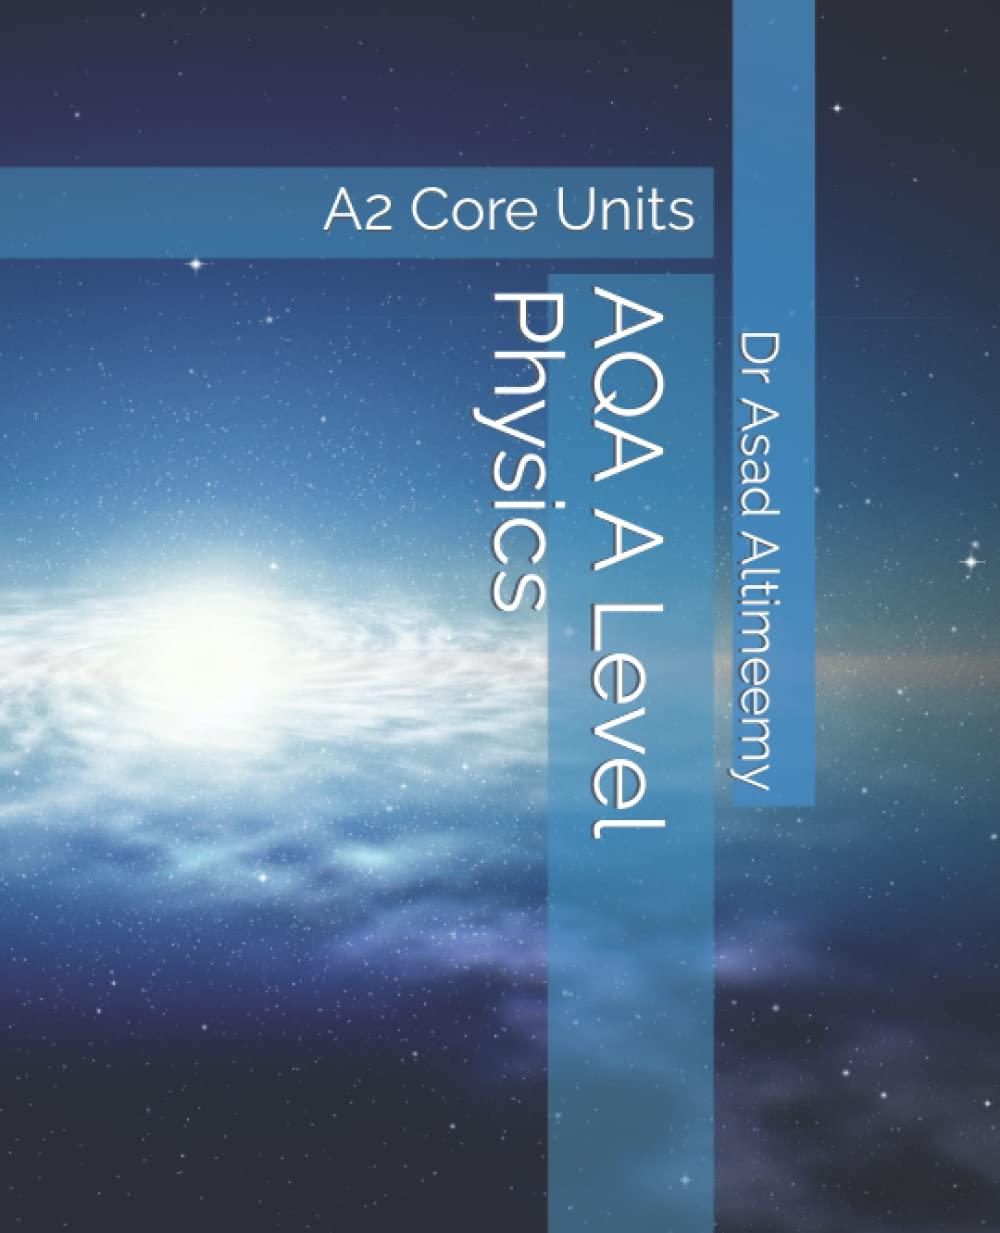 aqa a level physics a2 core units 1st edition asad altimeemy 165368965x, 978-1653689651